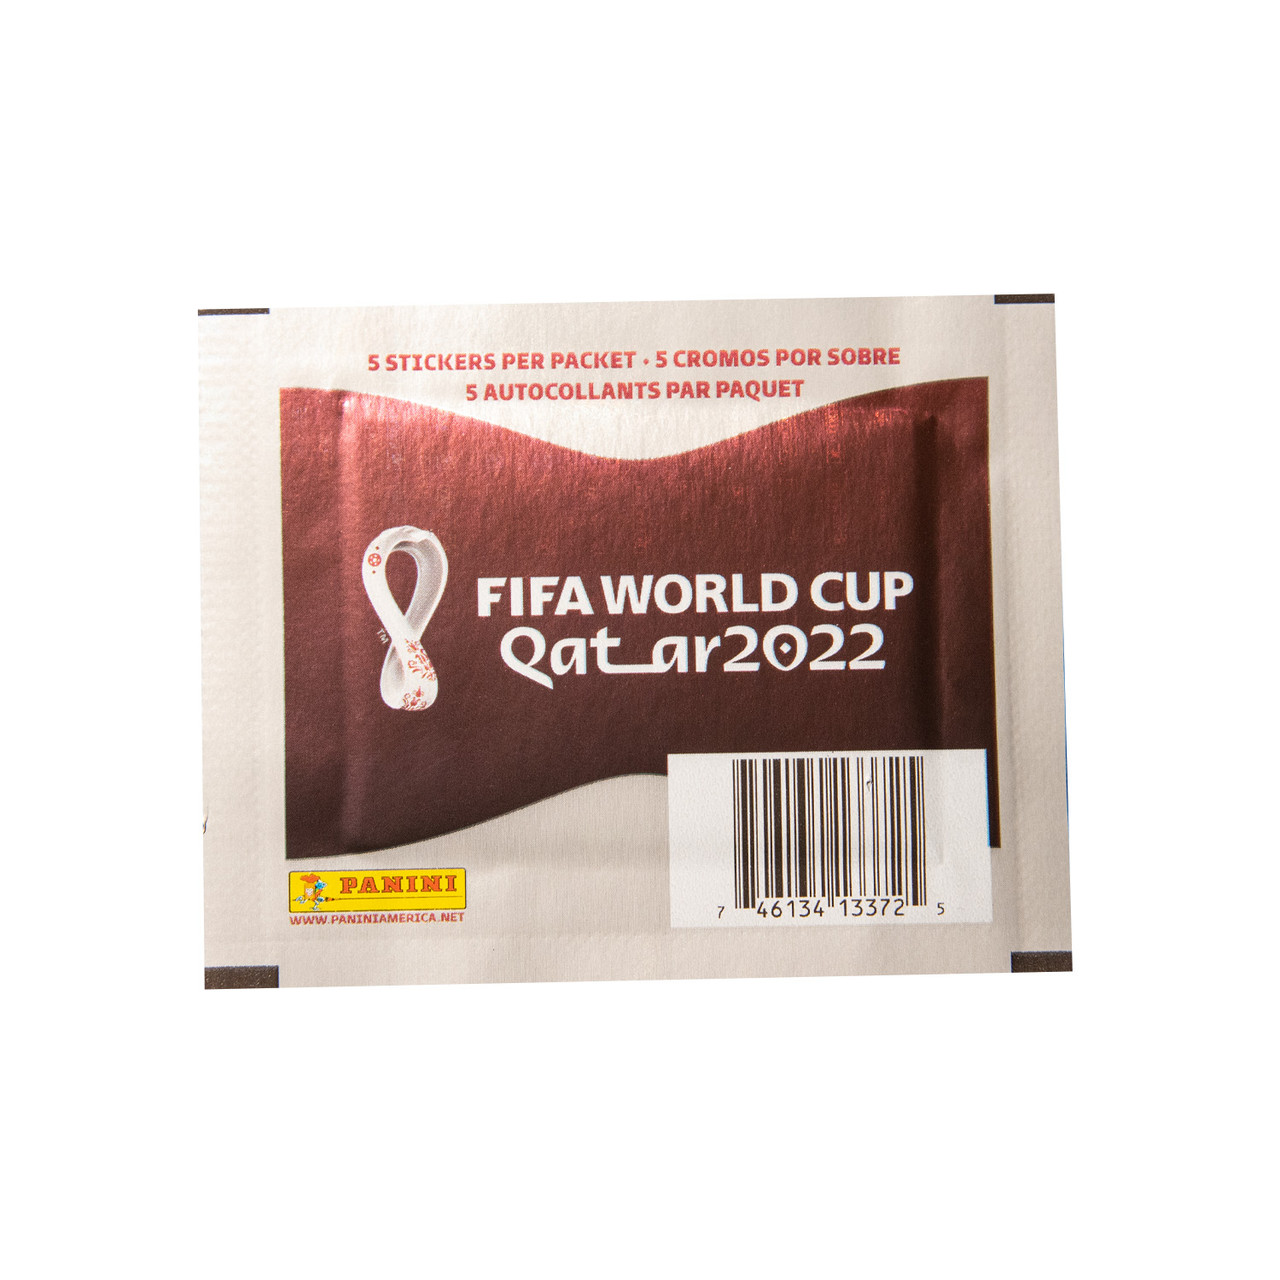 FIFA World Cup Qatar 2022 Sticker